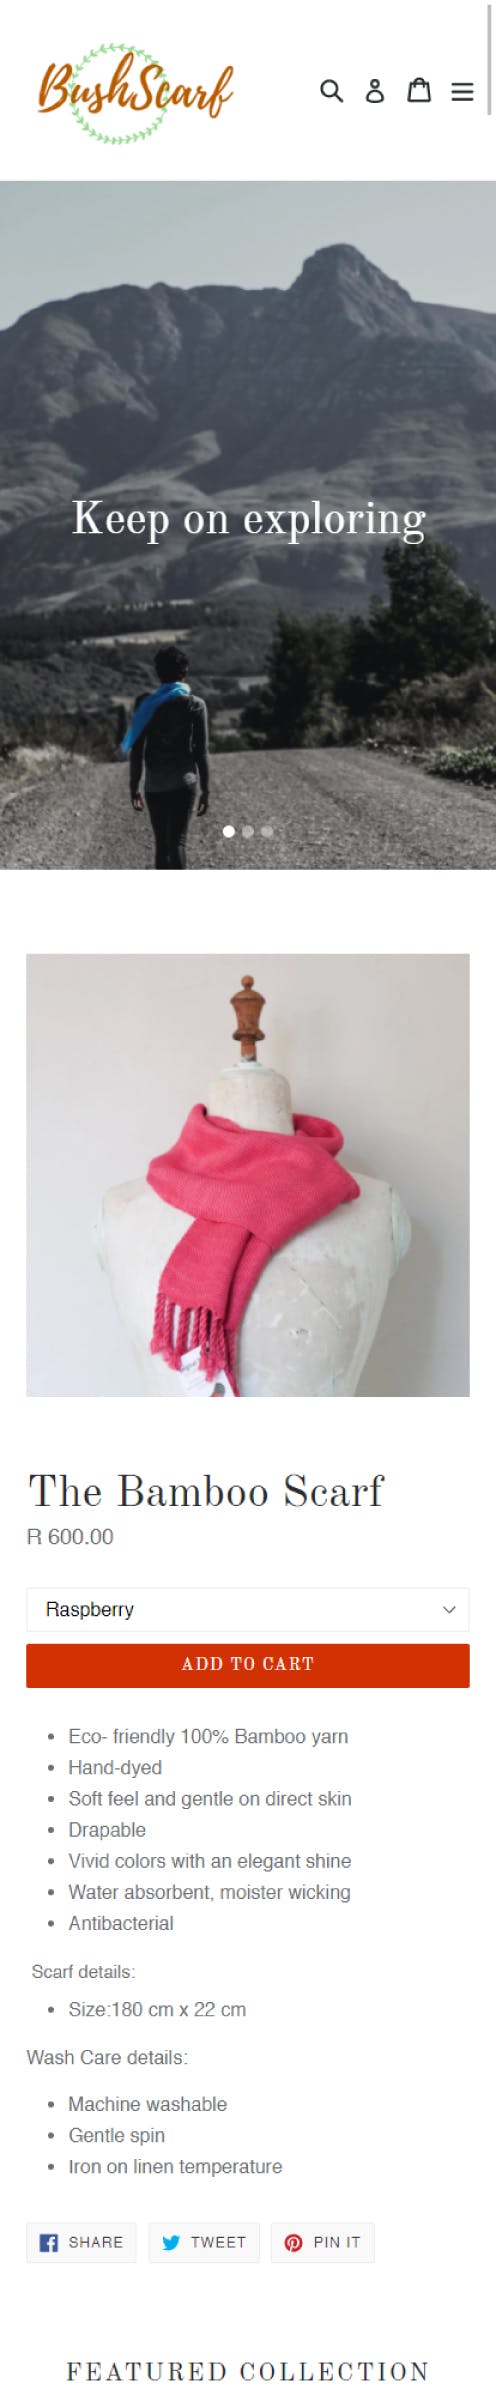 /images/work-preview-bushscarf.jpg